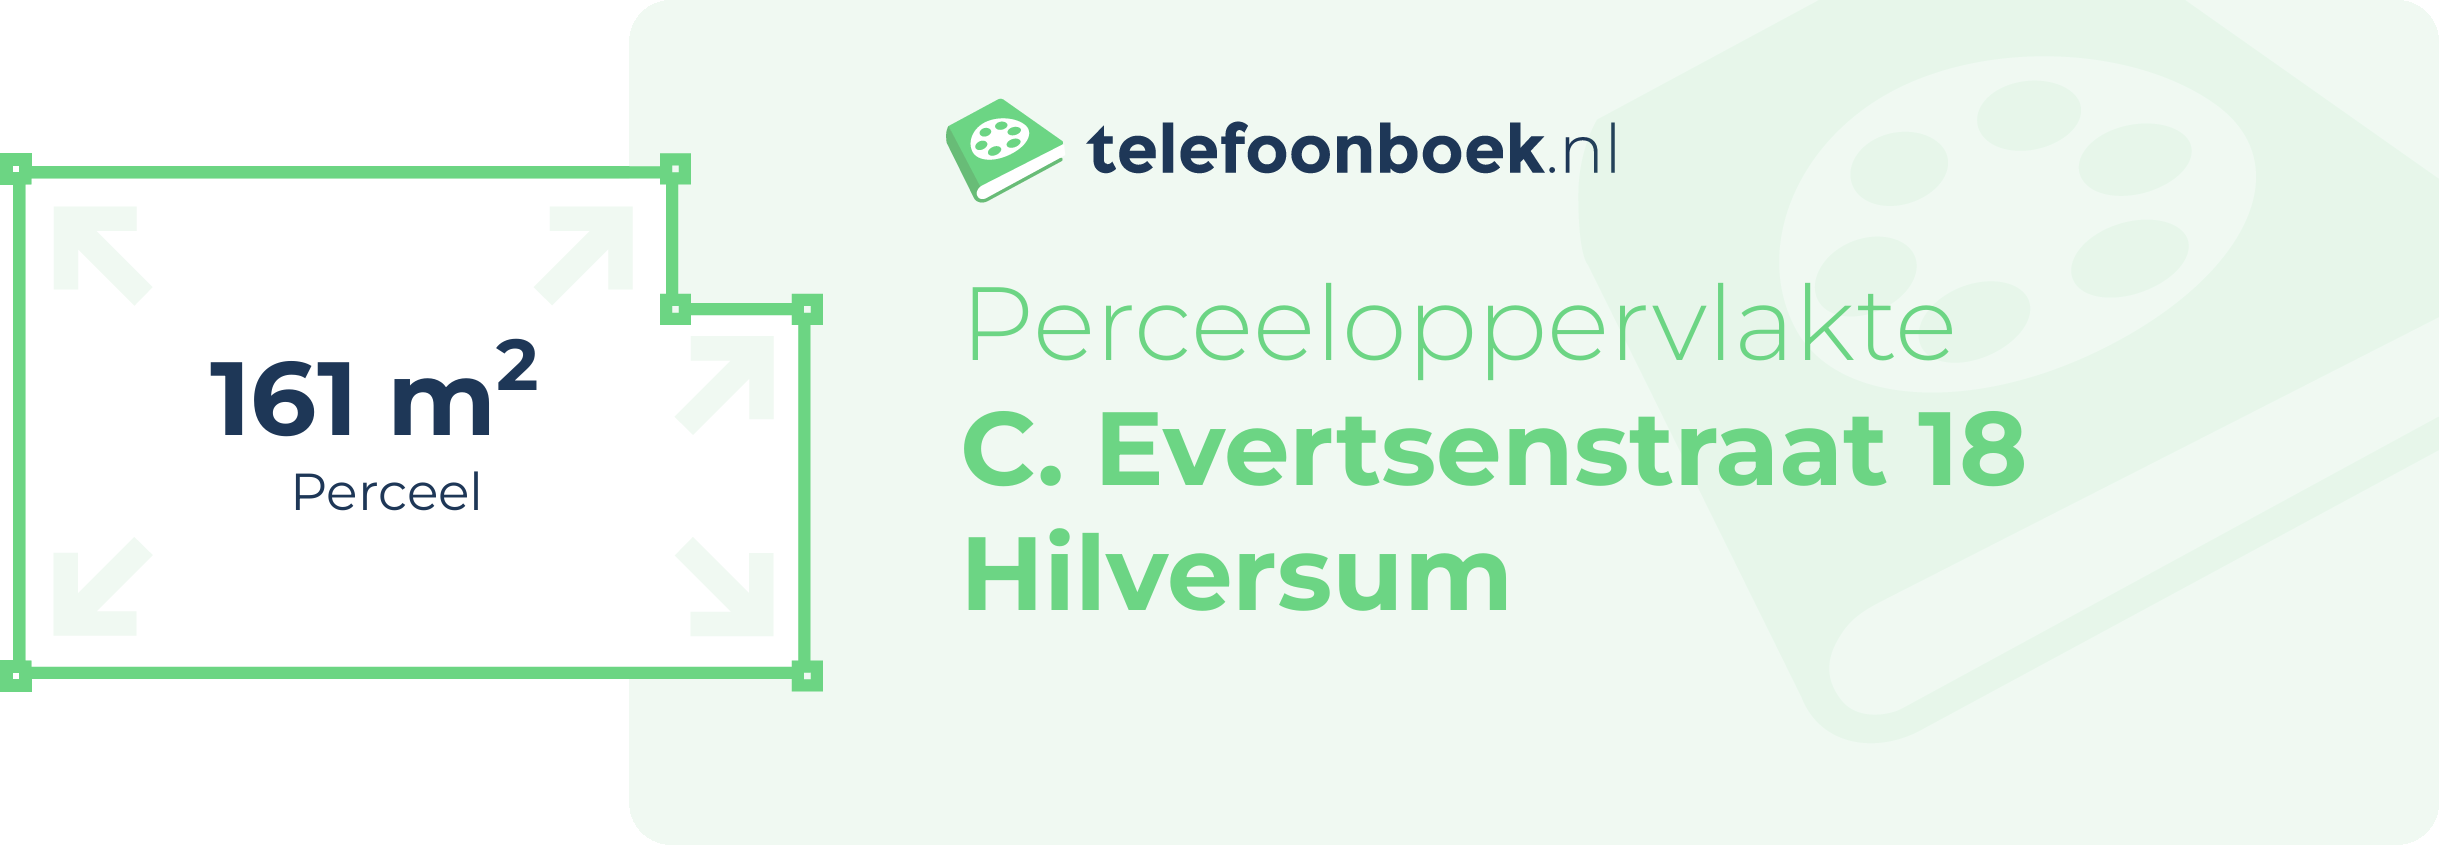 Perceeloppervlakte C. Evertsenstraat 18 Hilversum